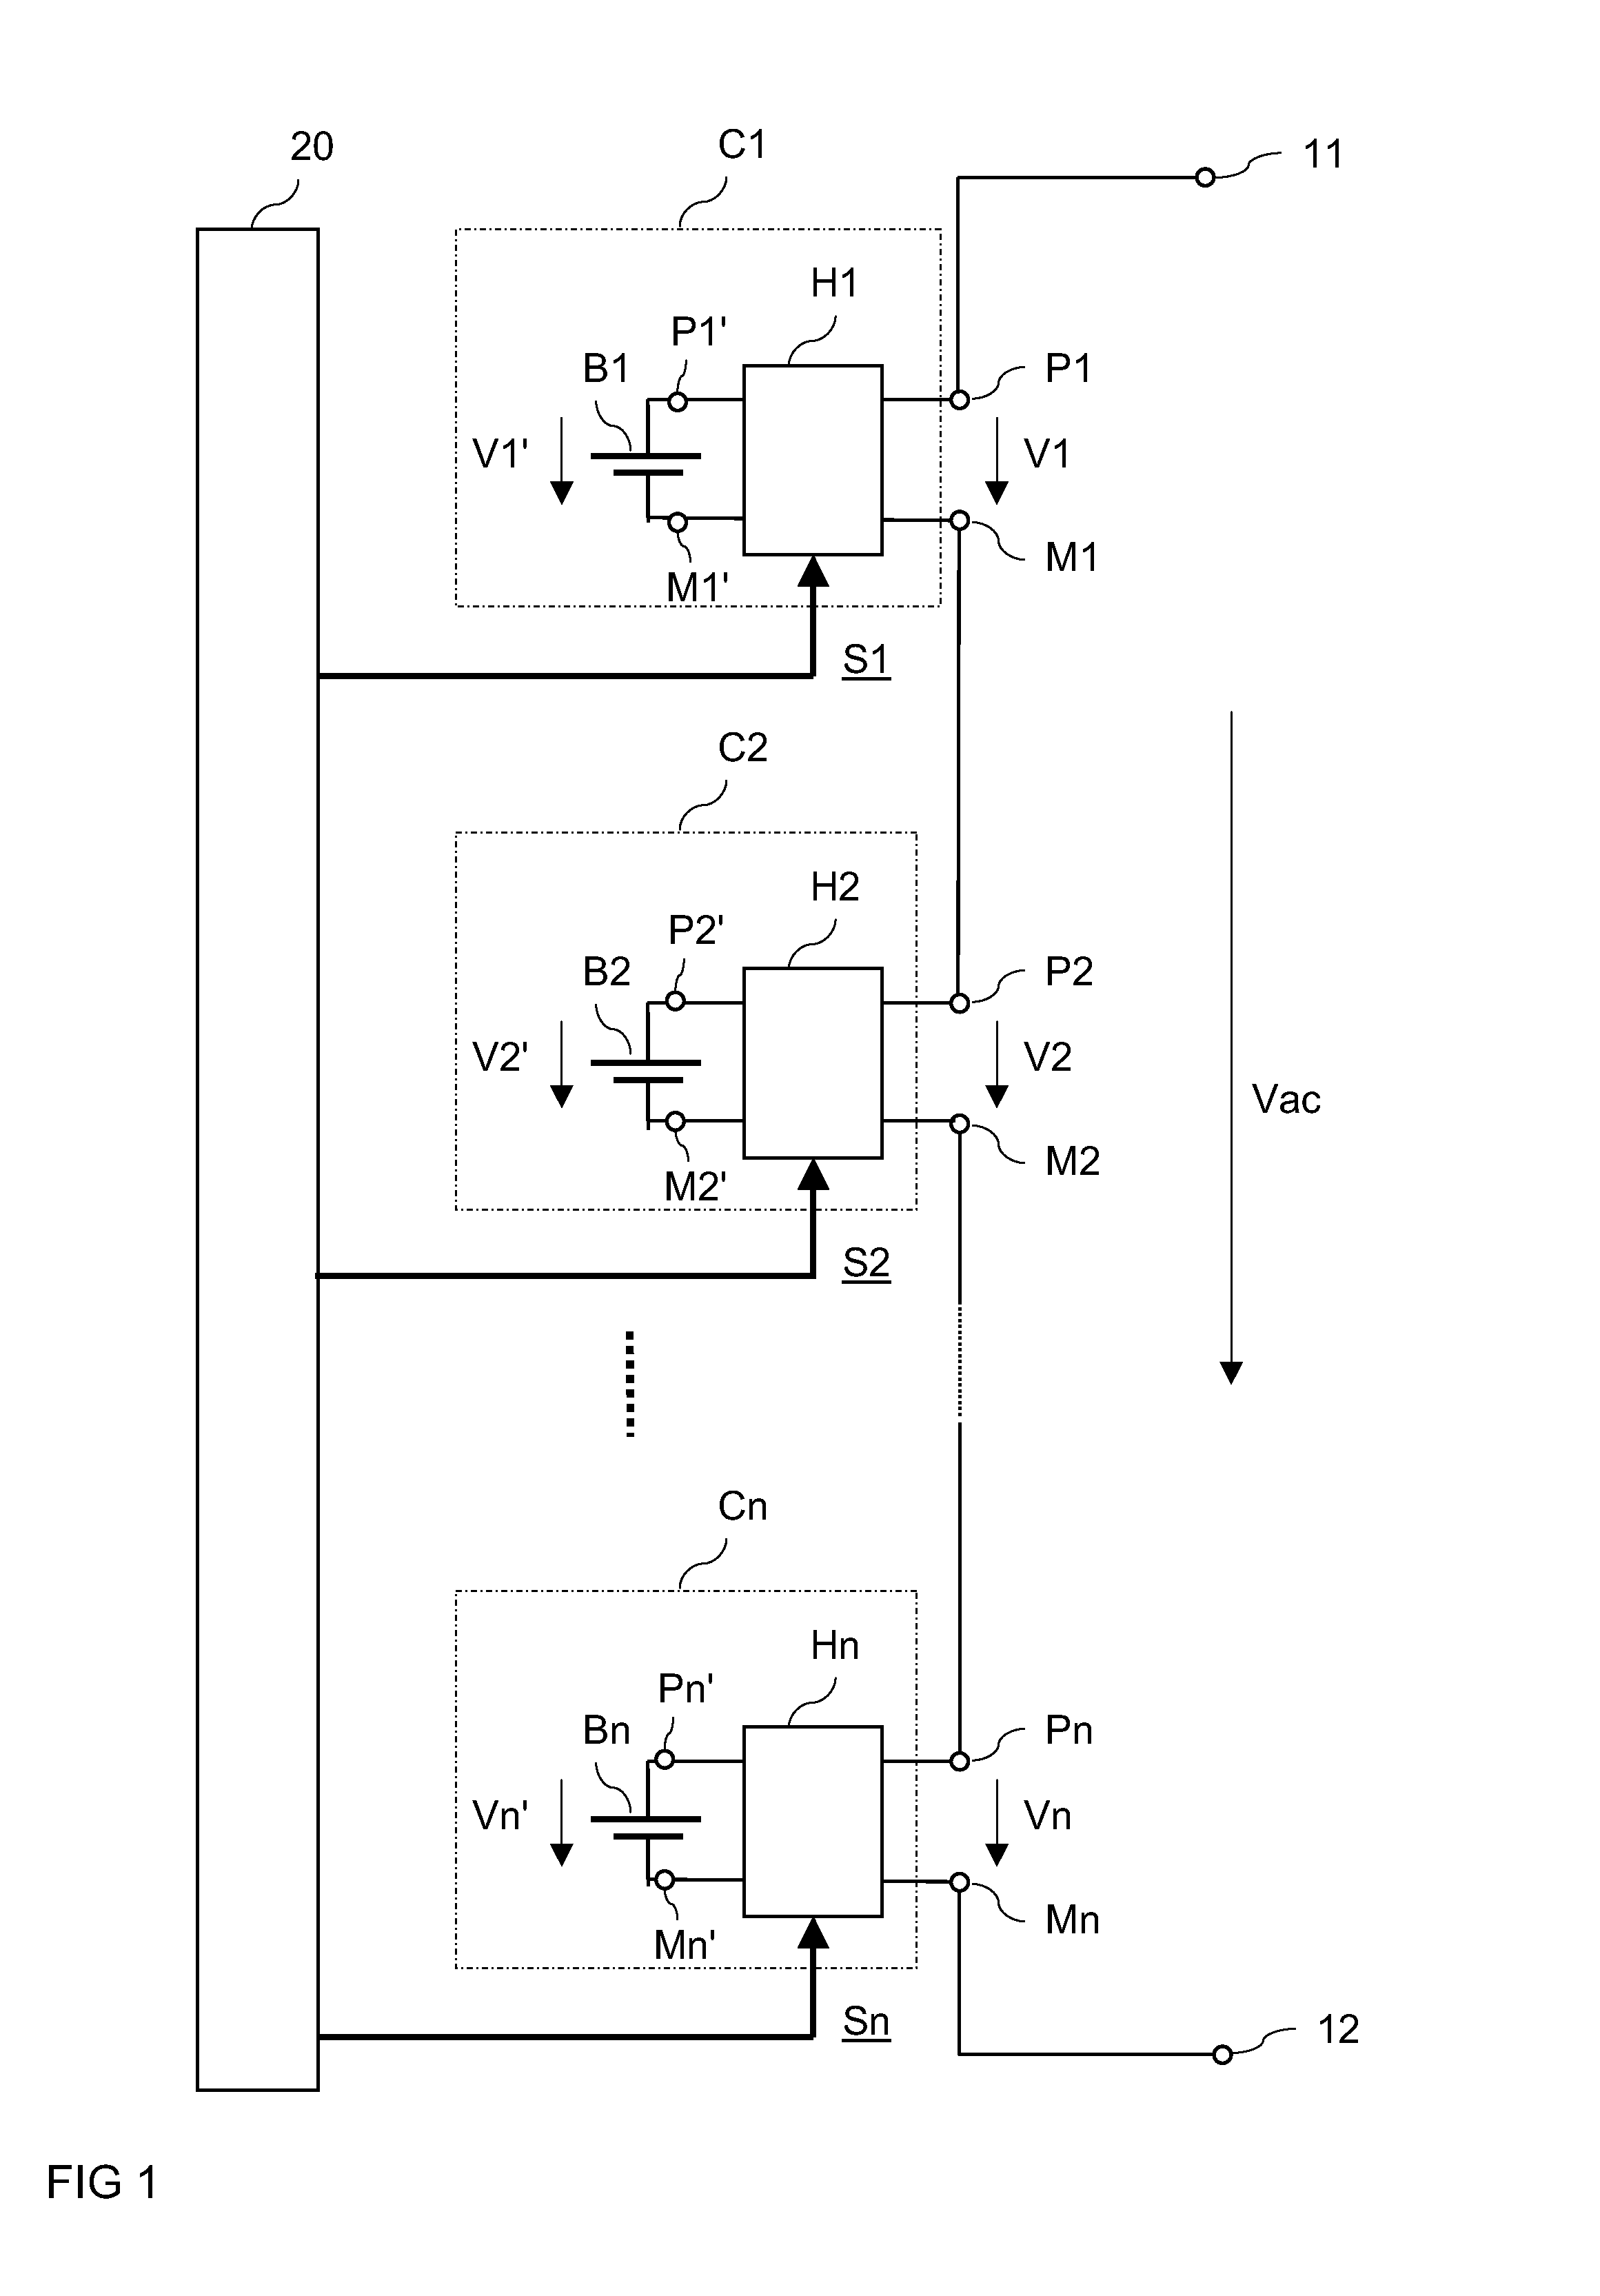 Circuit Arrangement Including a Multi-Level Converter